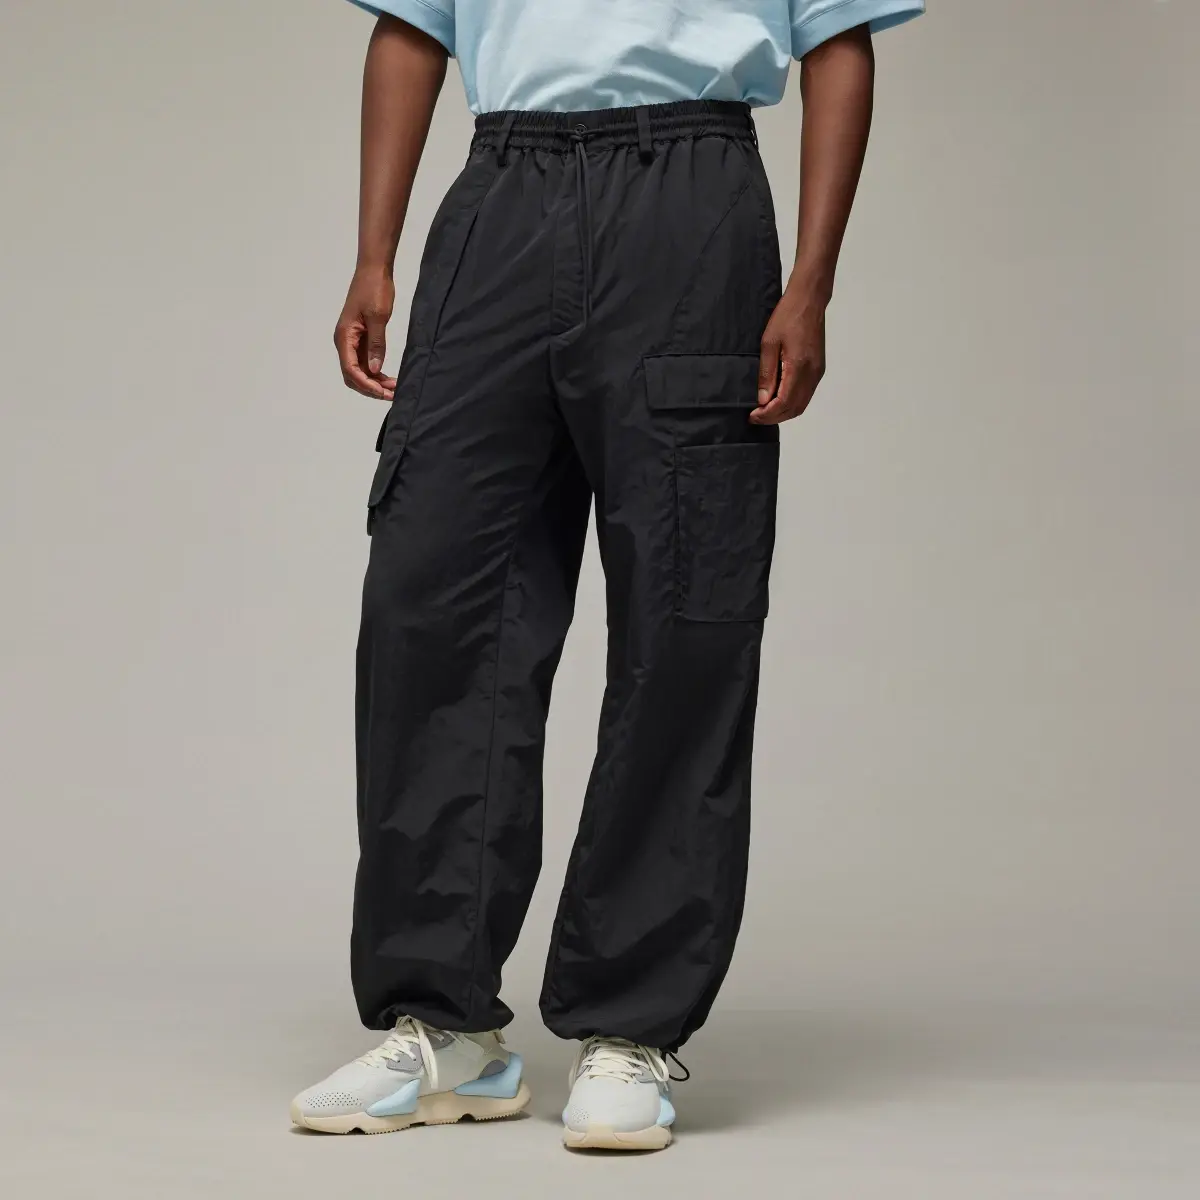 Adidas Y-3 Crinkle Nylon Pants. 1